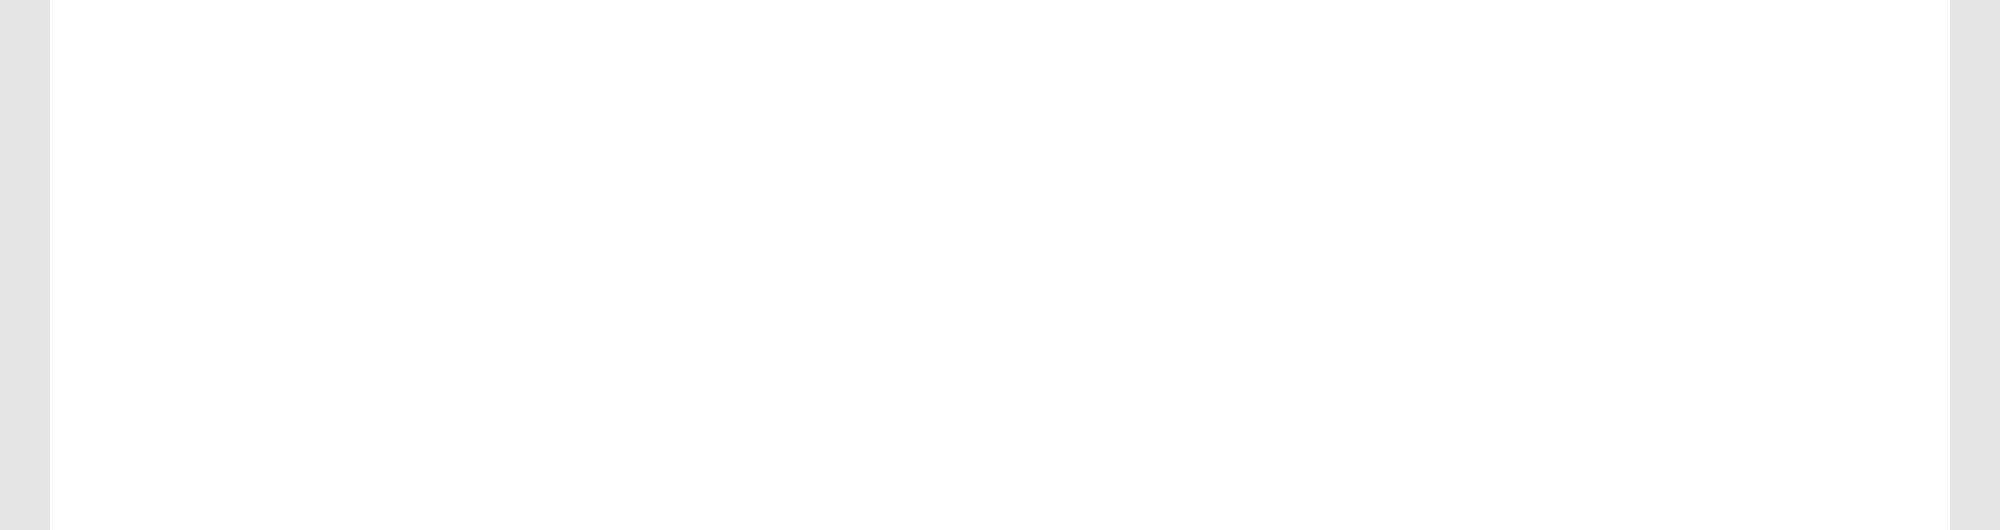 business_bnr_off